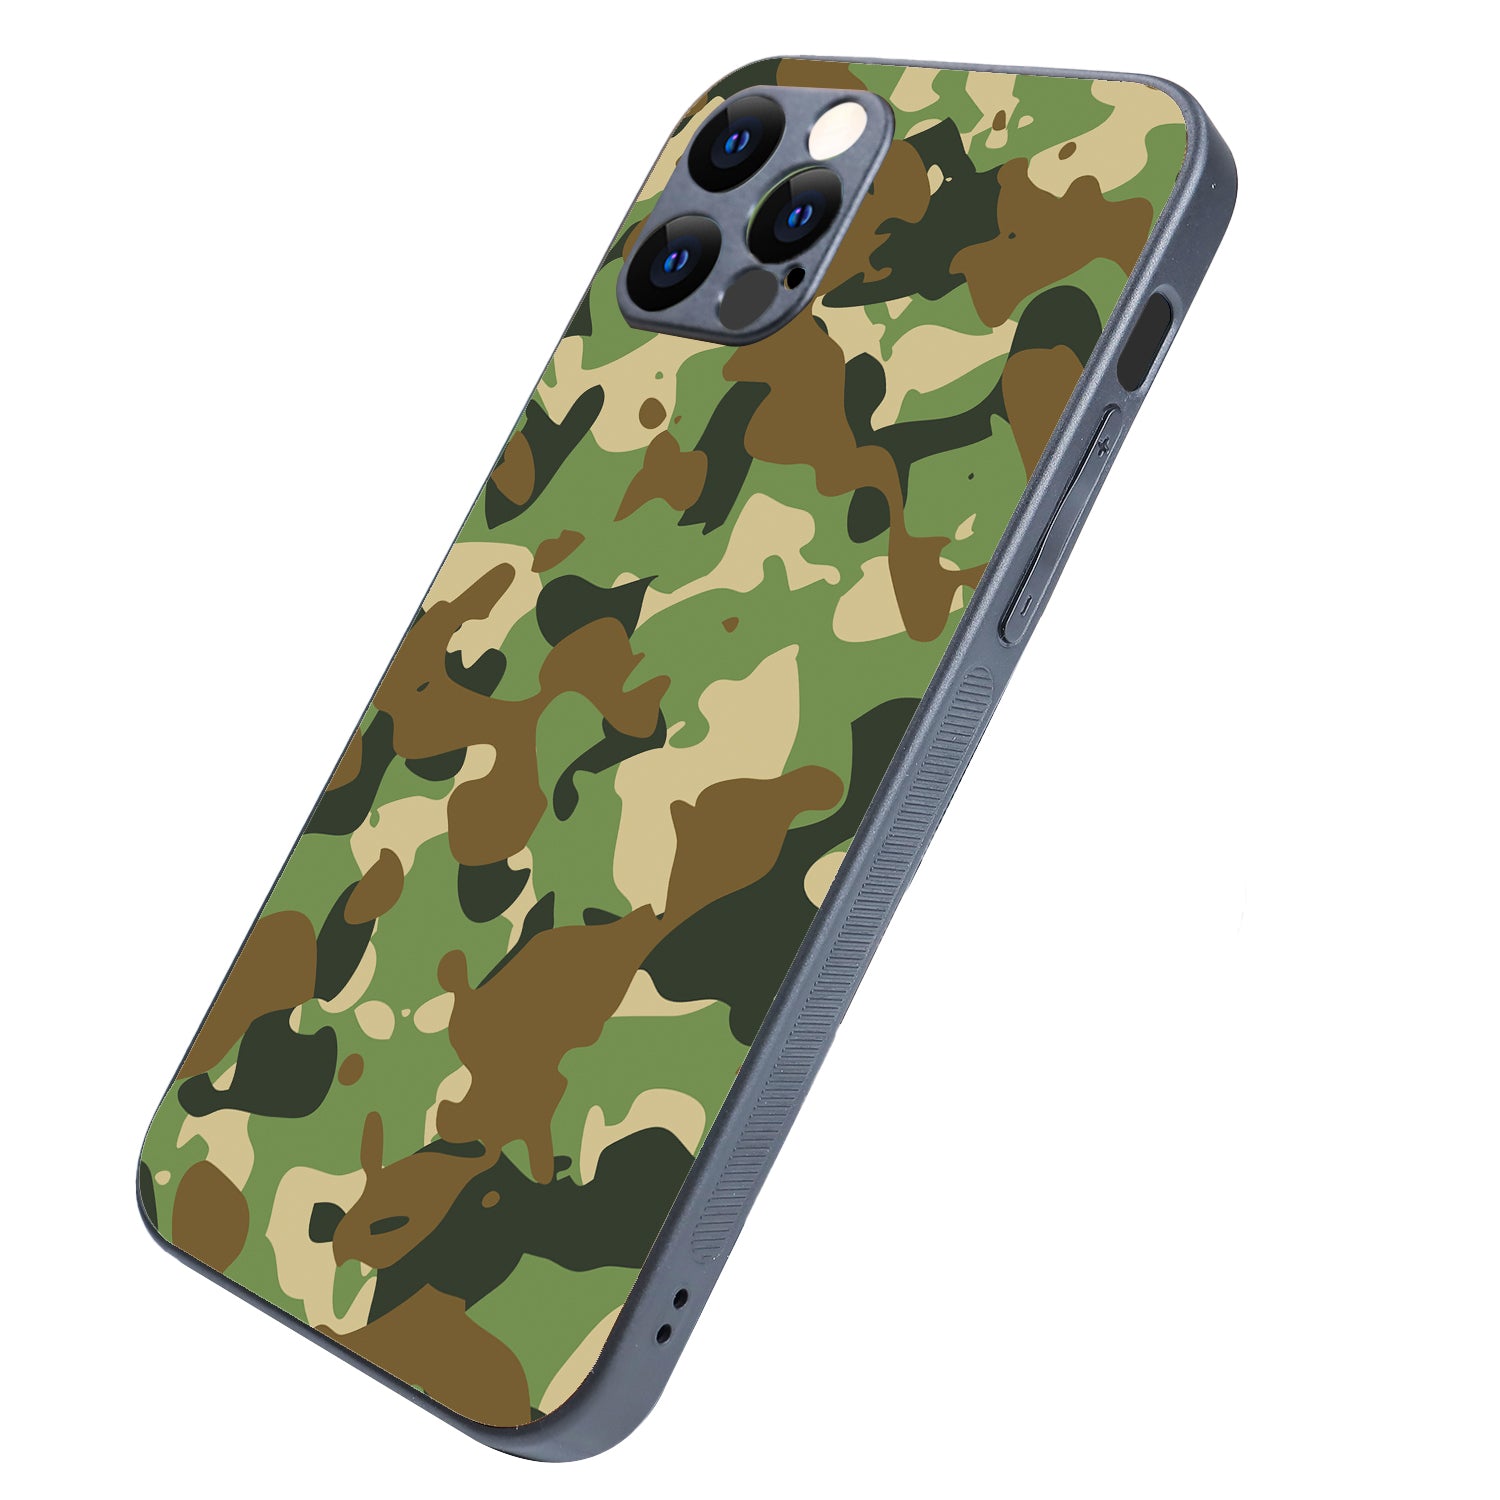 Camouflage Design iPhone 12 Pro Case